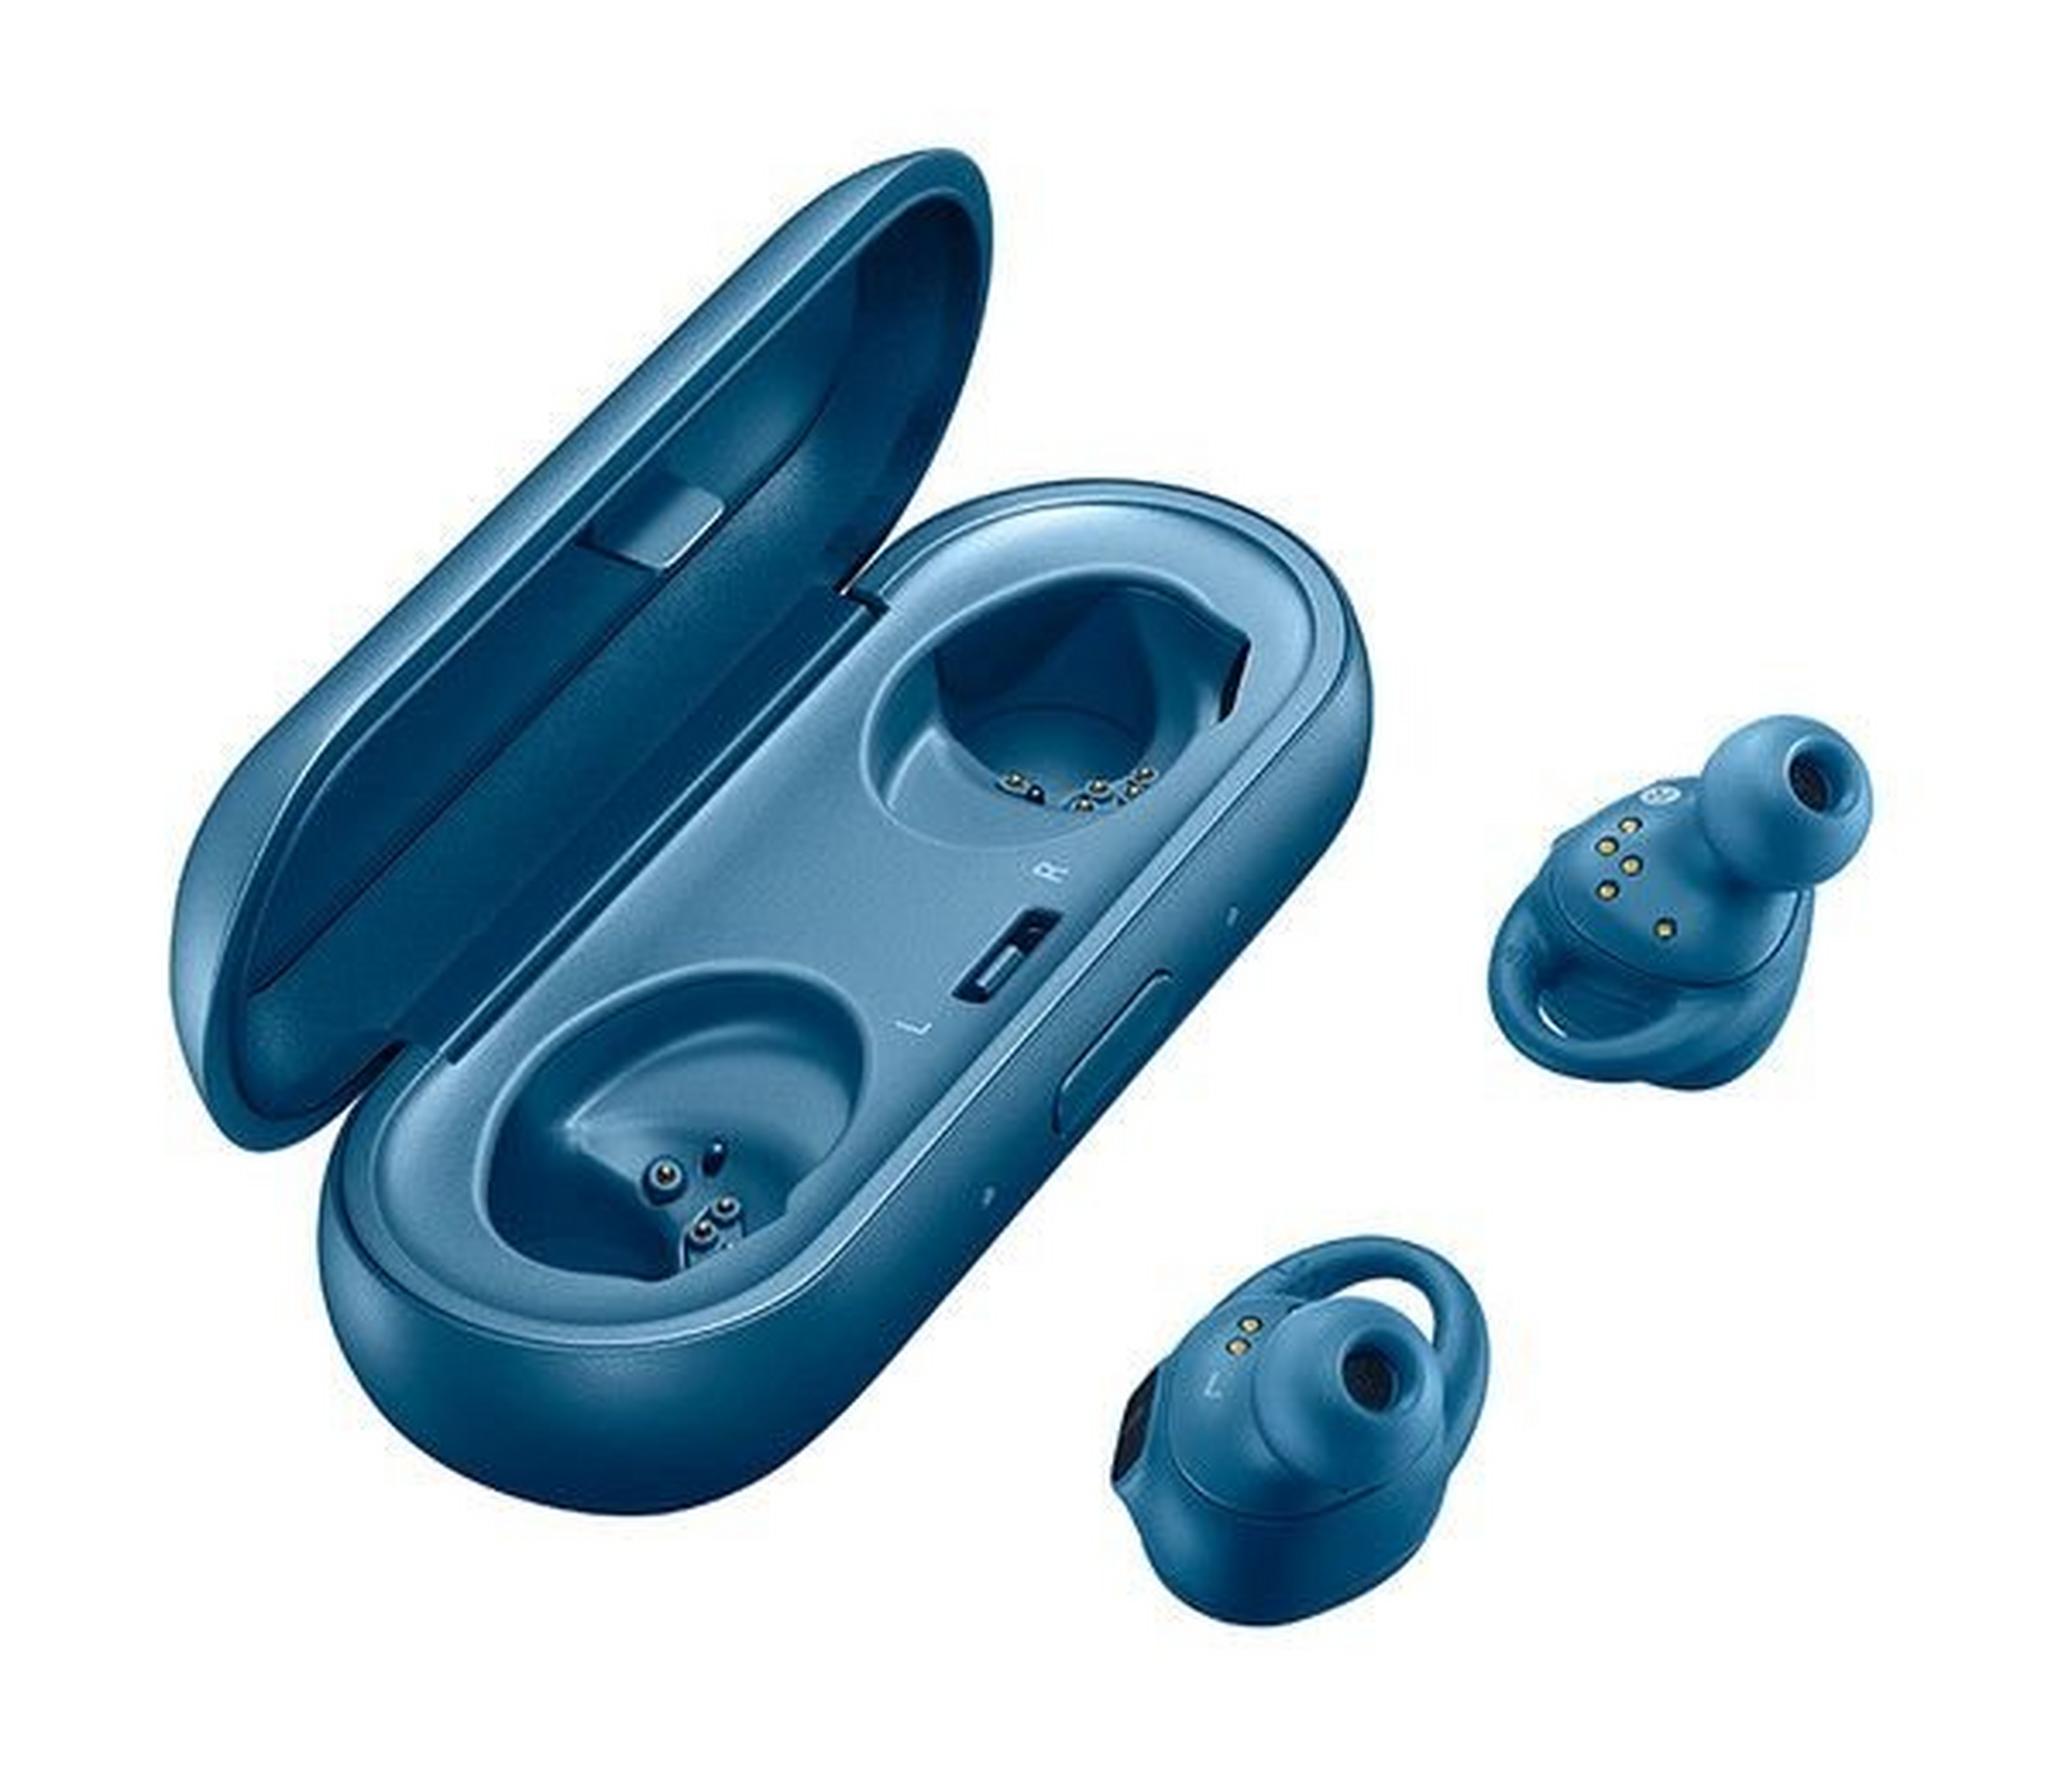 Samsung Gear IconX Wireless Earbuds – Blue